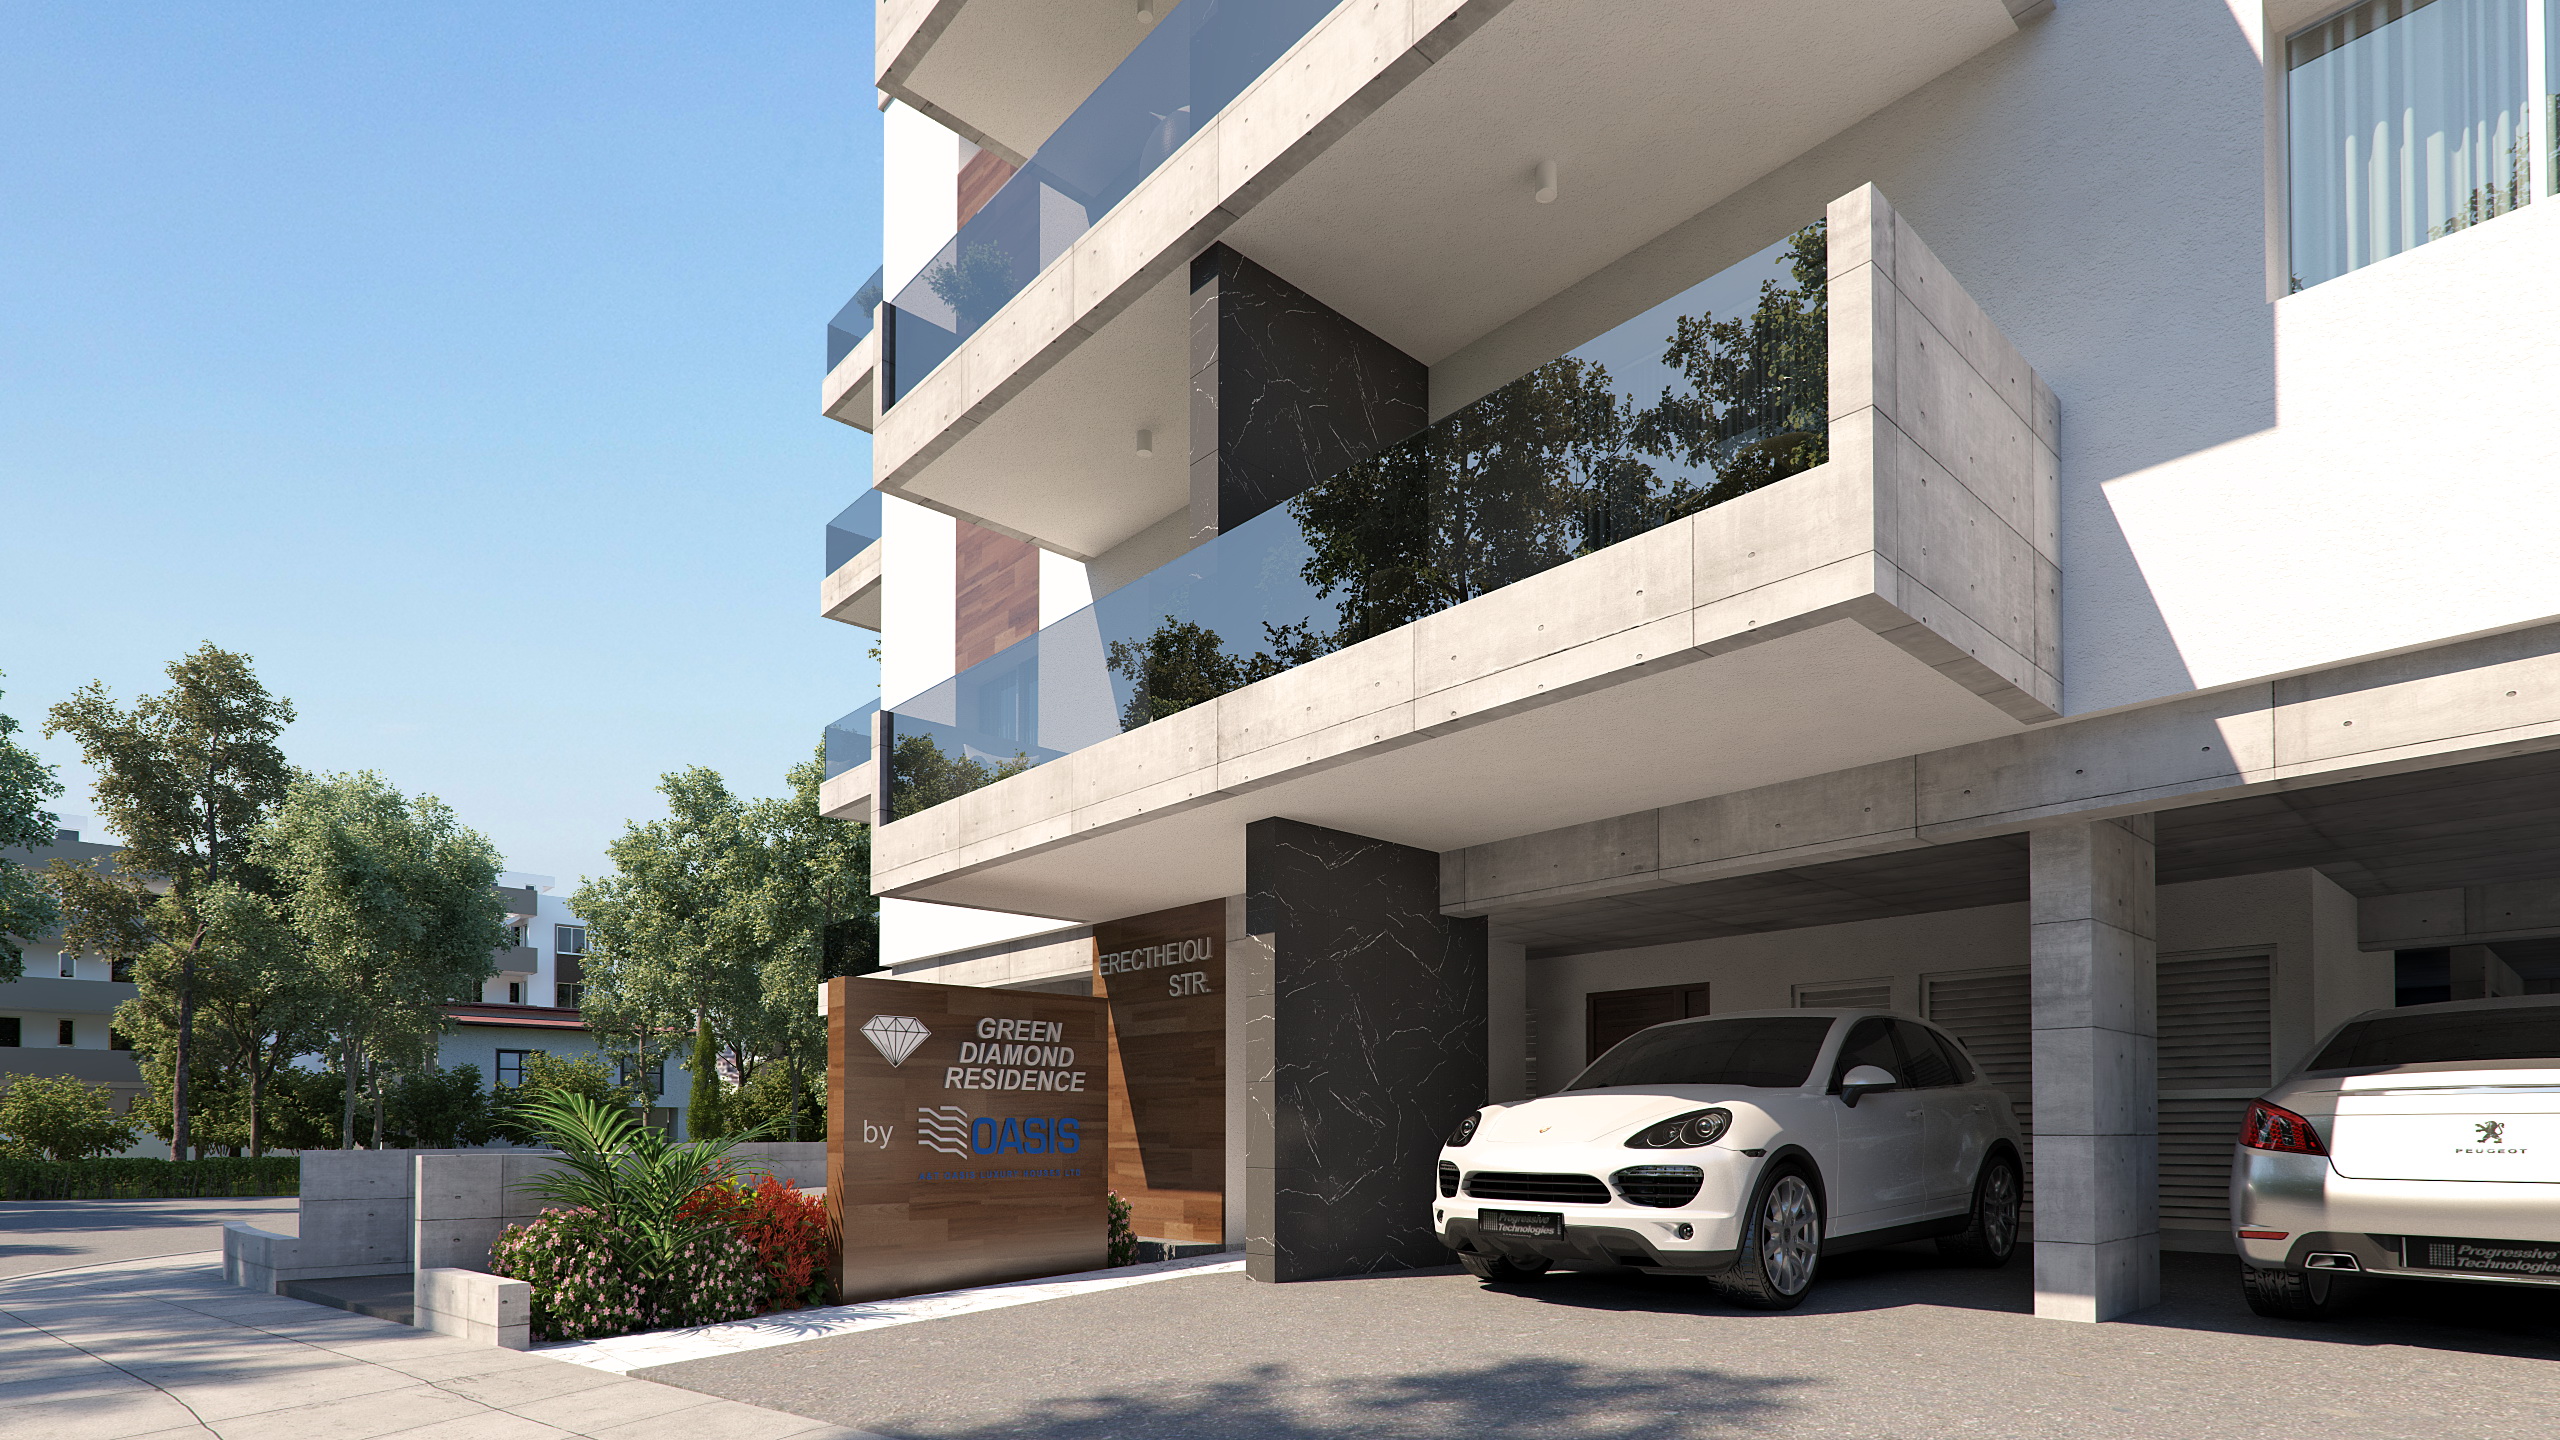 2 Bedroom Apartment for Sale in Larnaca – Tsakilero